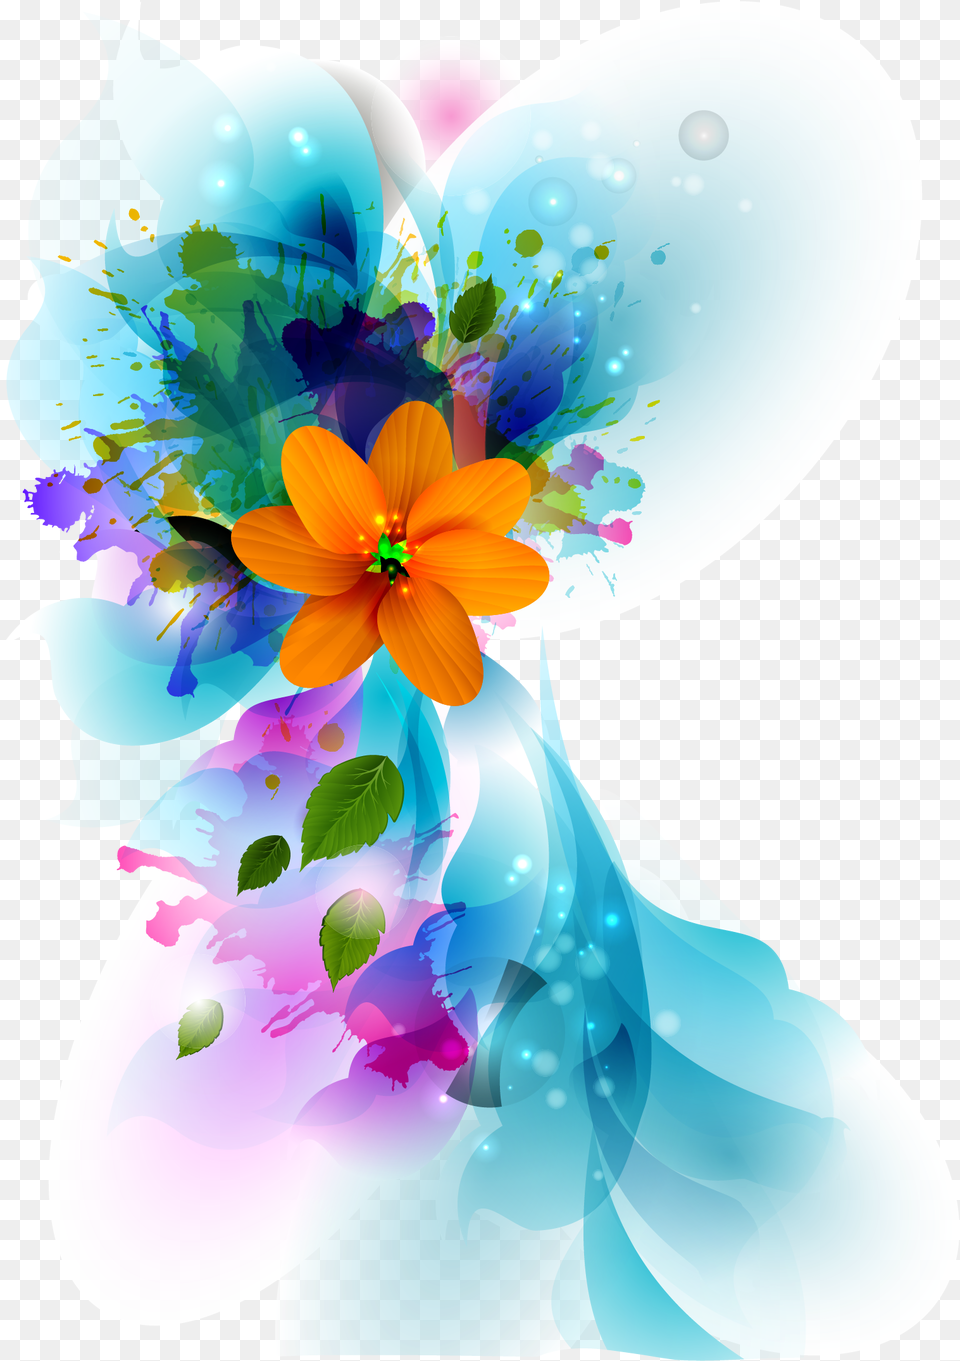 Color Wallpaper Encapsulated Flora Flower Vector Background, Art, Floral Design, Graphics, Pattern Png